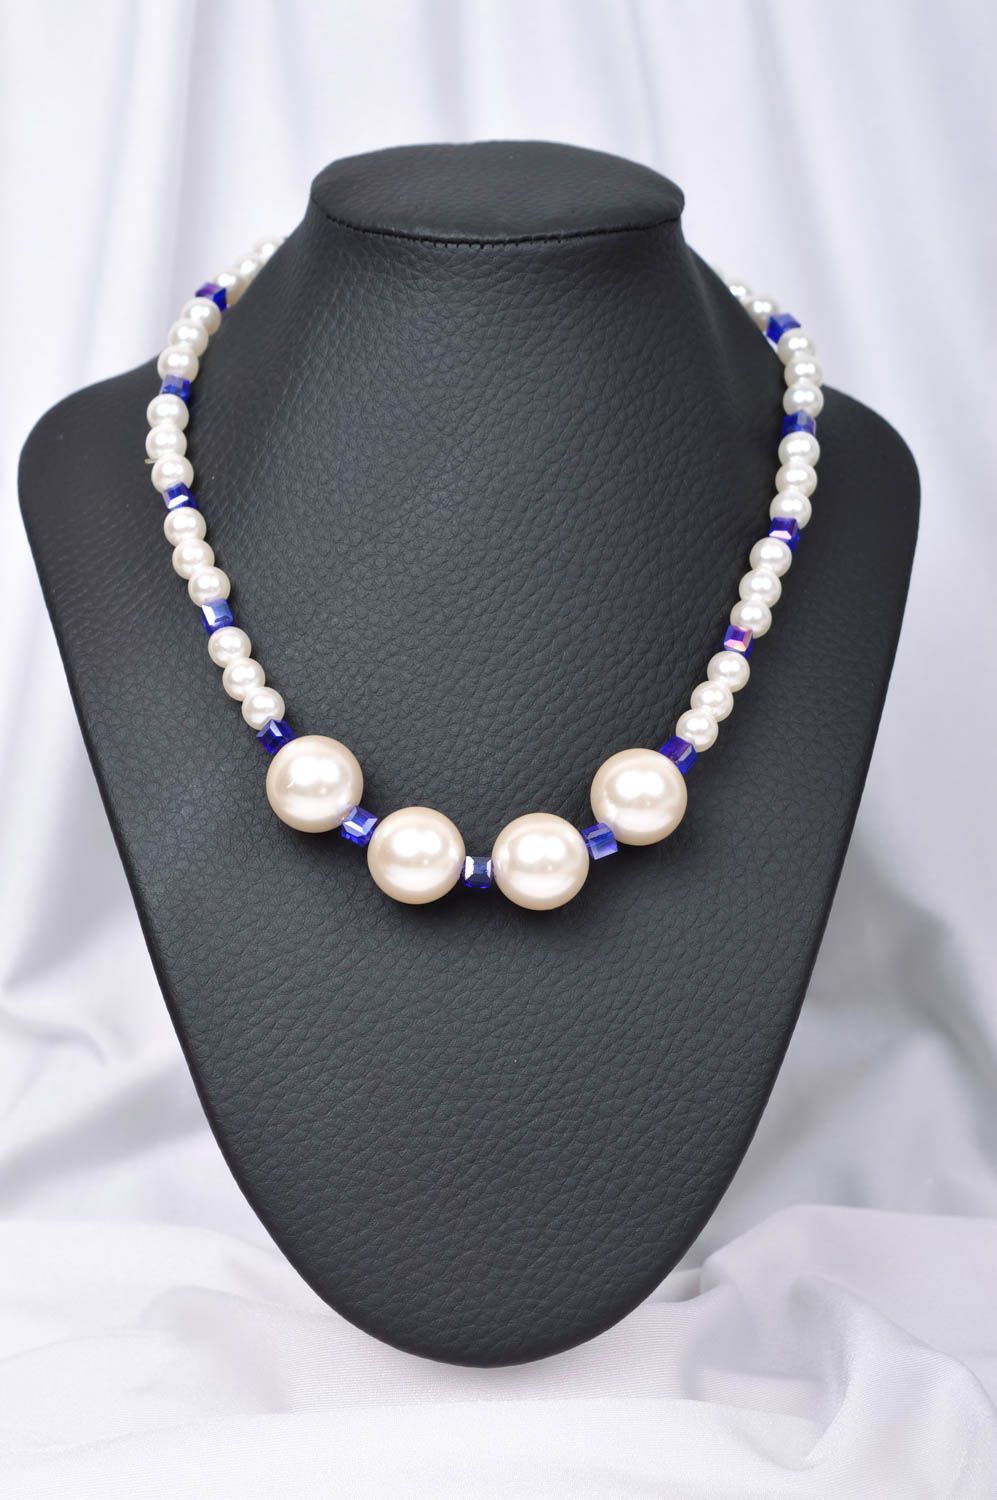 Stylish handmade beaded necklace artisan jewelry designs fashion accessories photo 2